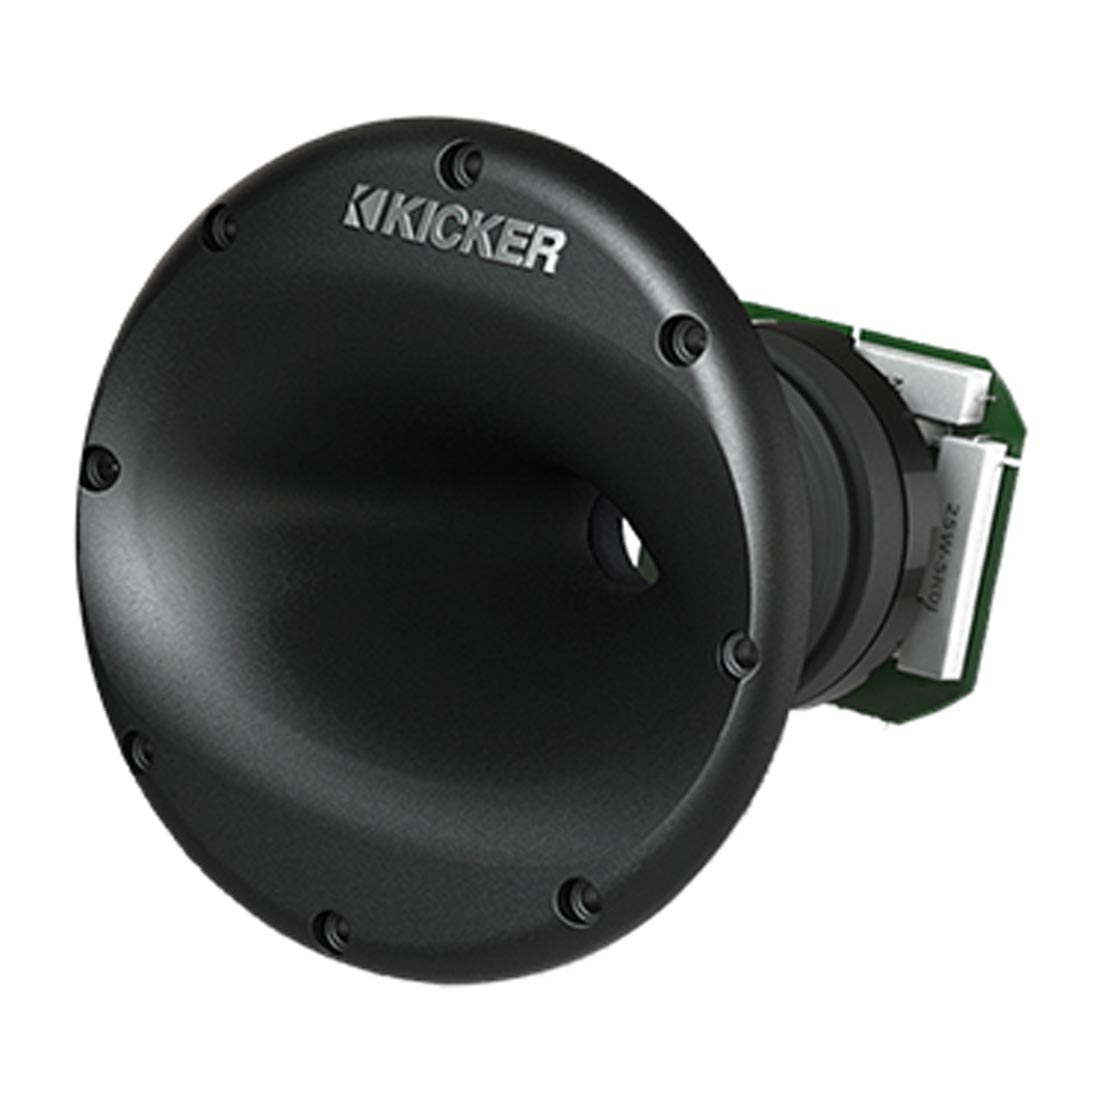 Kicker 41KMS674C 6.75" Marine Component Speaker Tower System